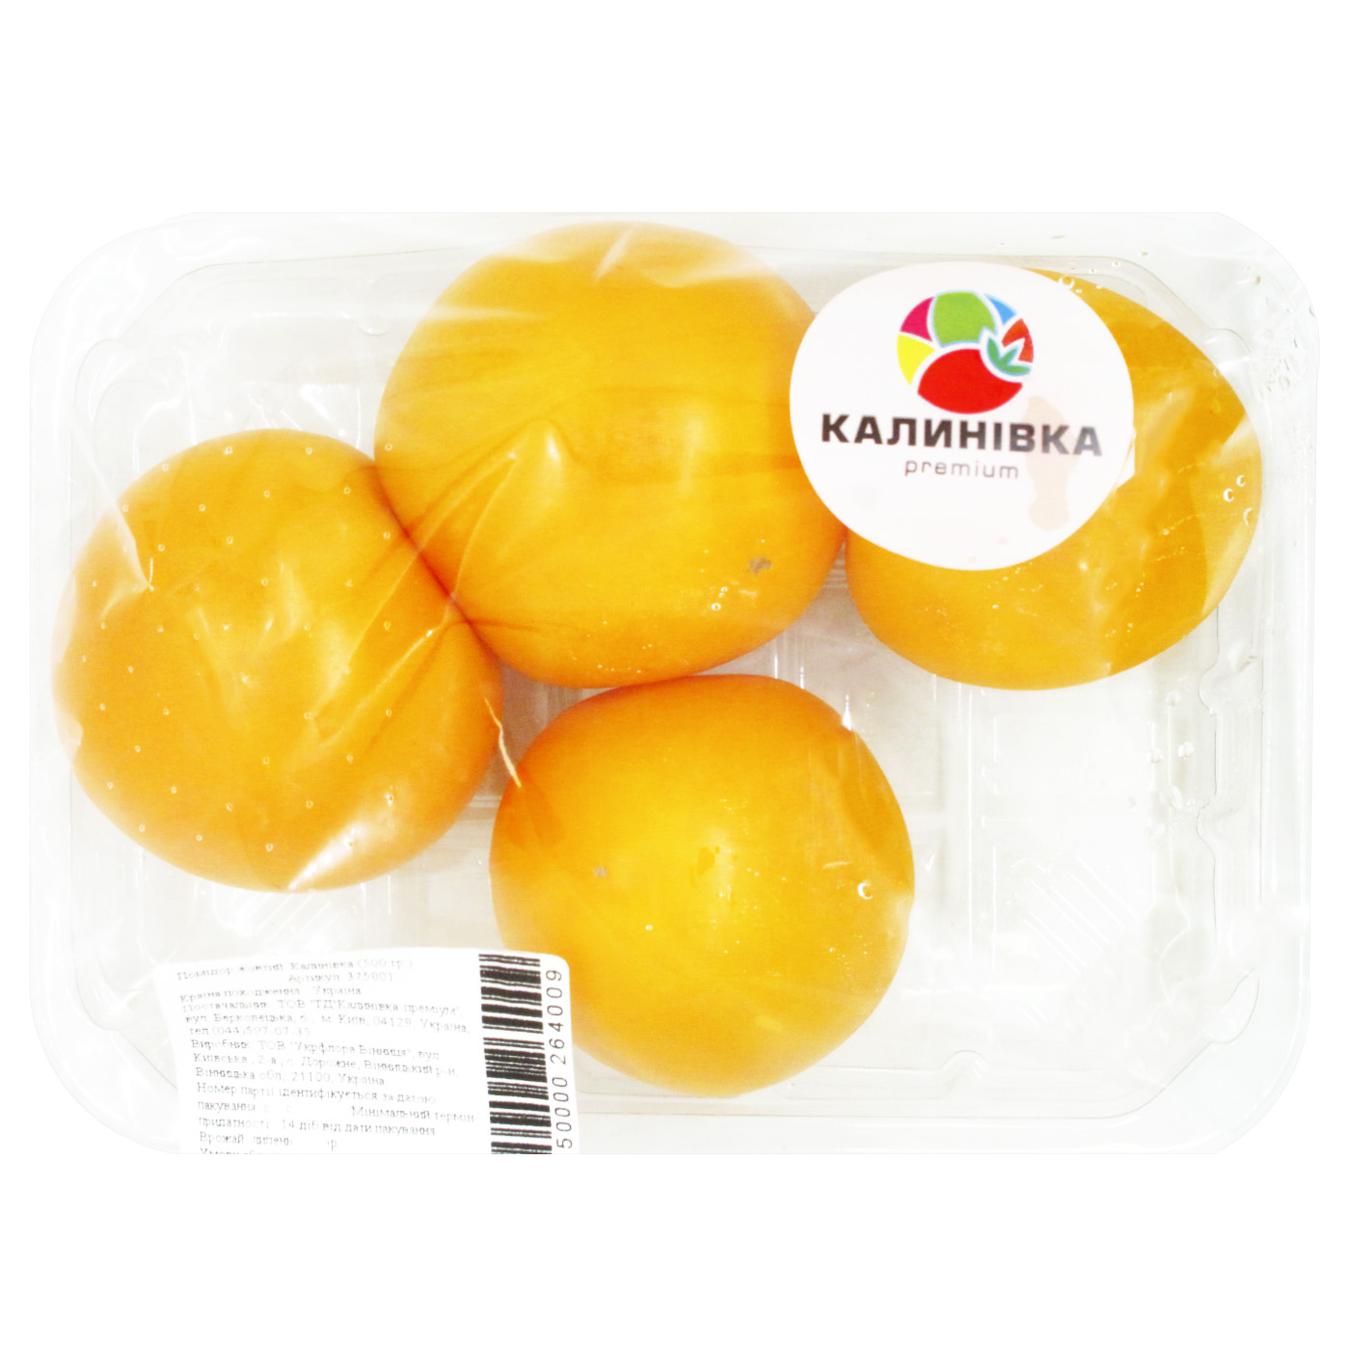 Yellow tomato Kalinovka 500g 2